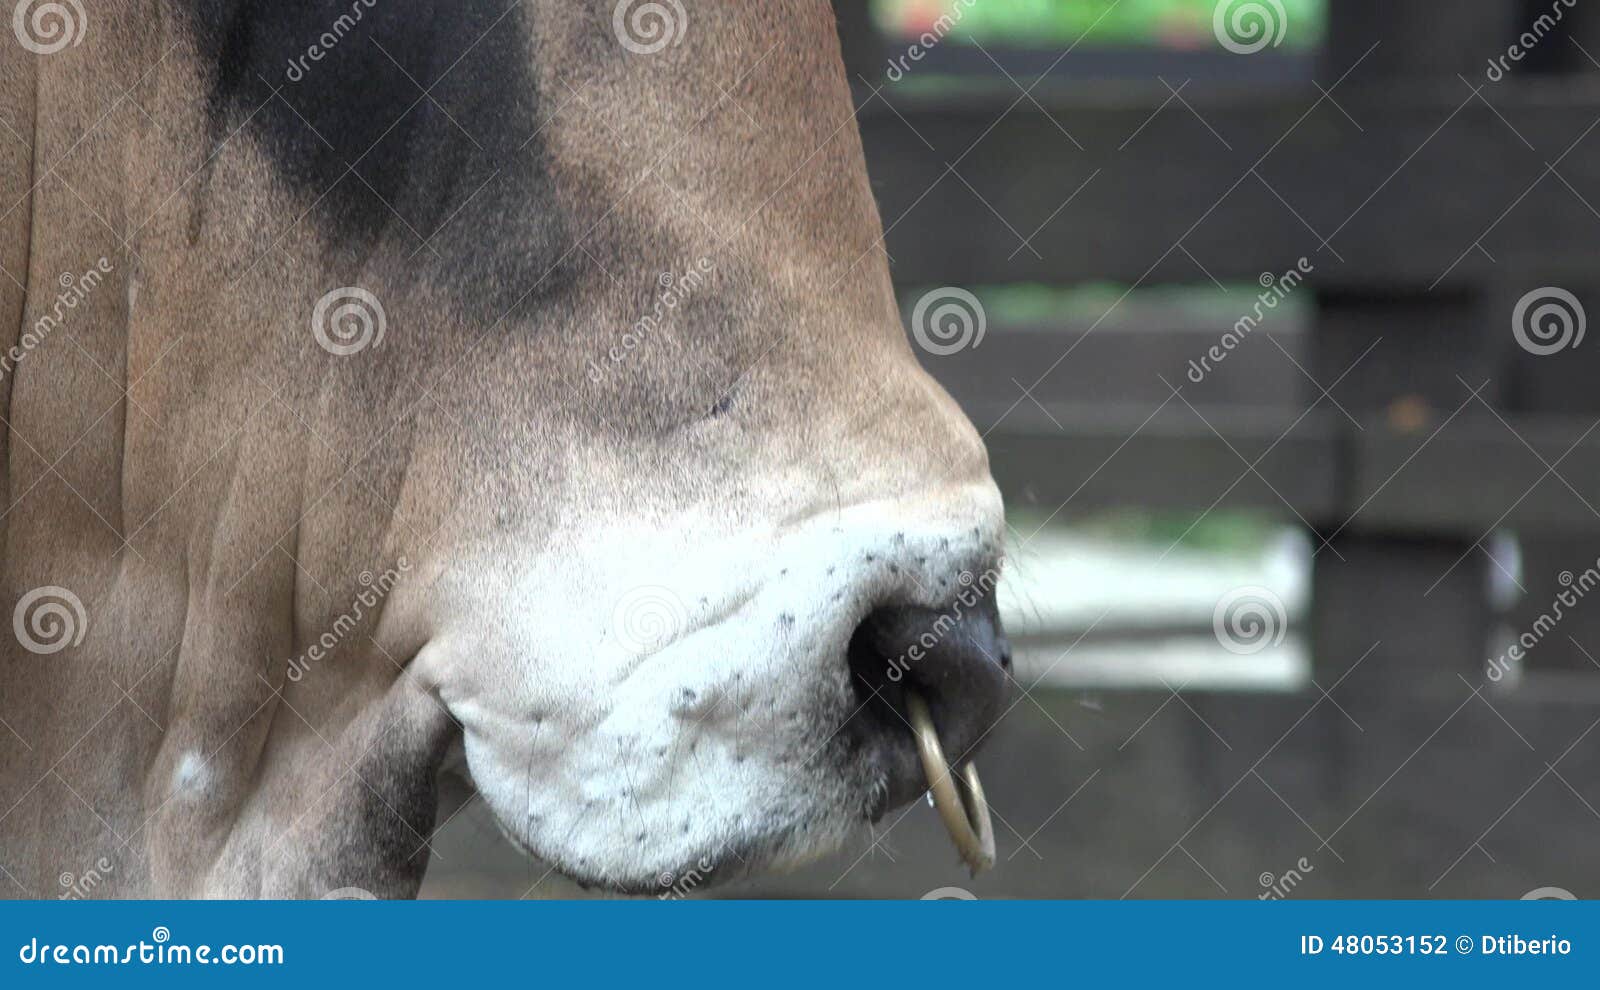 Zebu, Cattle, Cows, Bulls, Farm Animals Stock Footage - Video of calves,  herd: 48053152